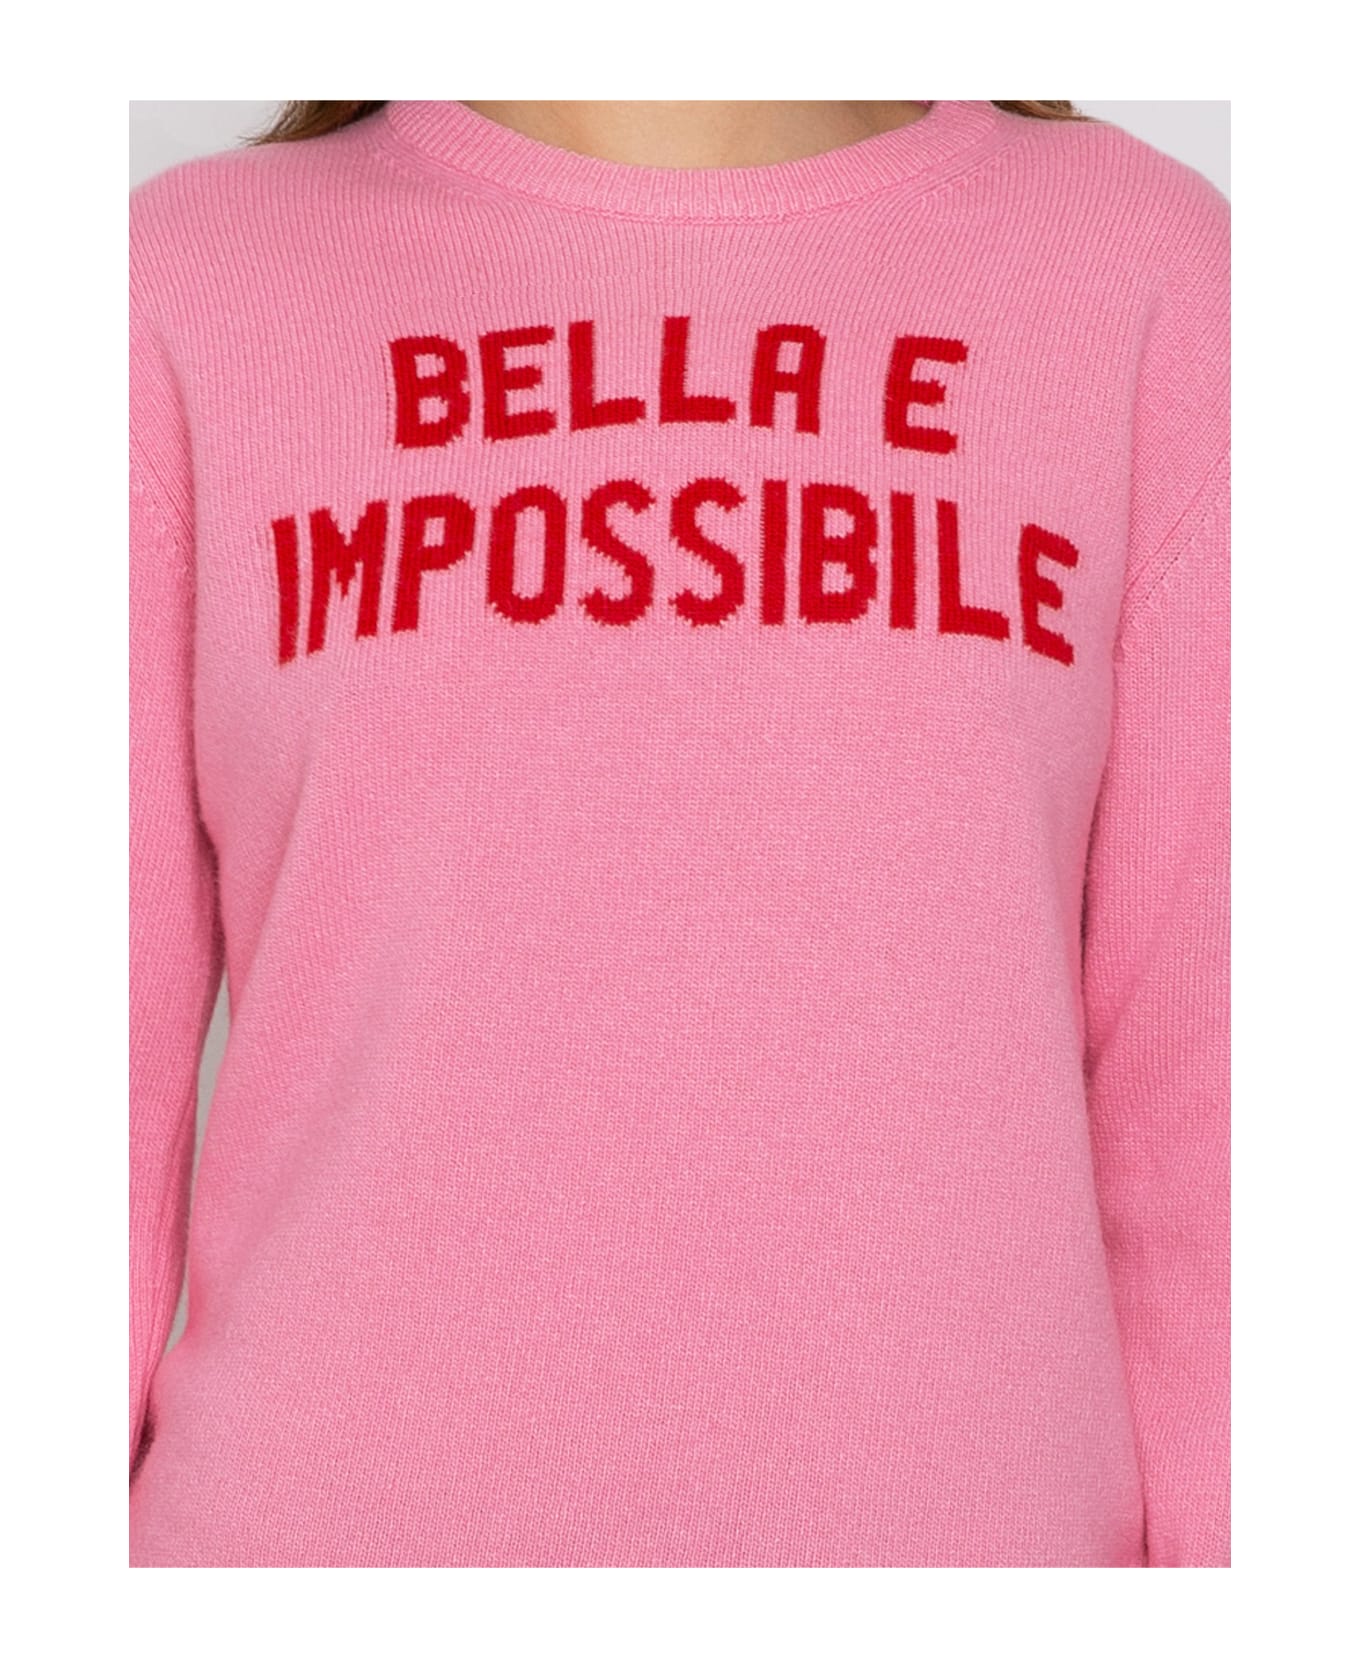 MC2 Saint Barth Woman Sweater With Bella E Impossibile Print - PINK ニットウェア